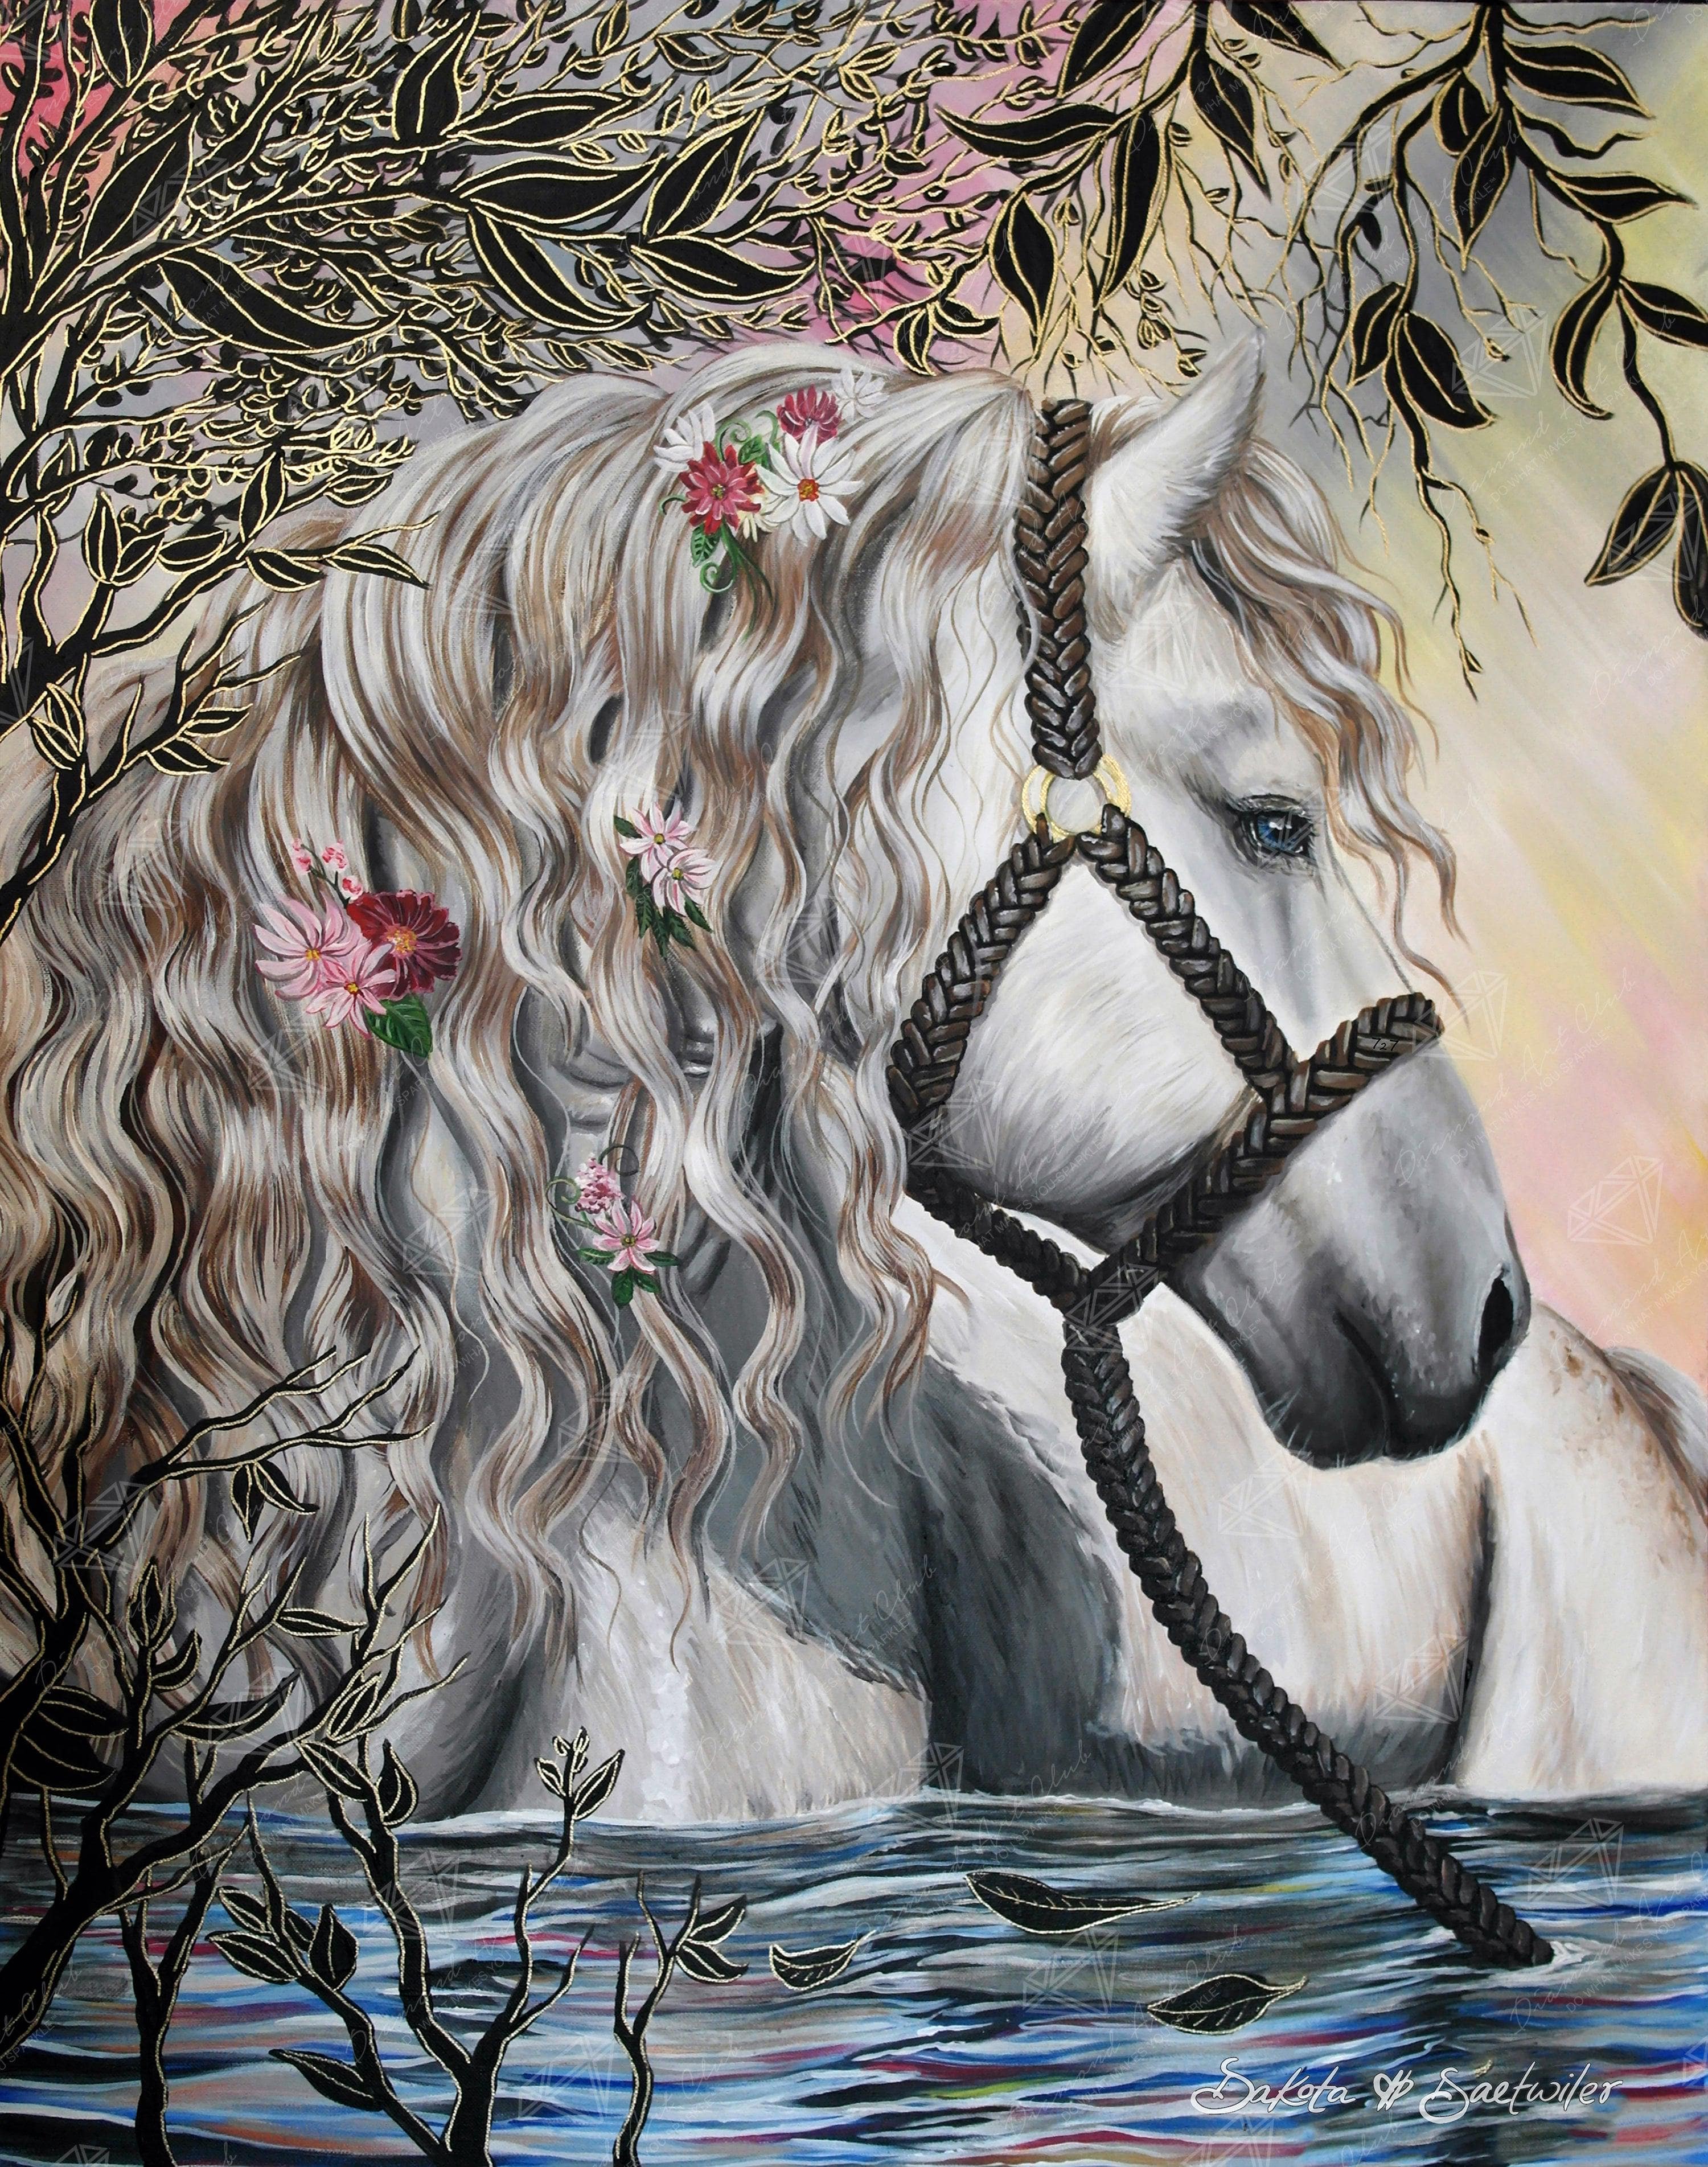 Colorful Horses Diamond Art, Full Square Drills, 12 Designs